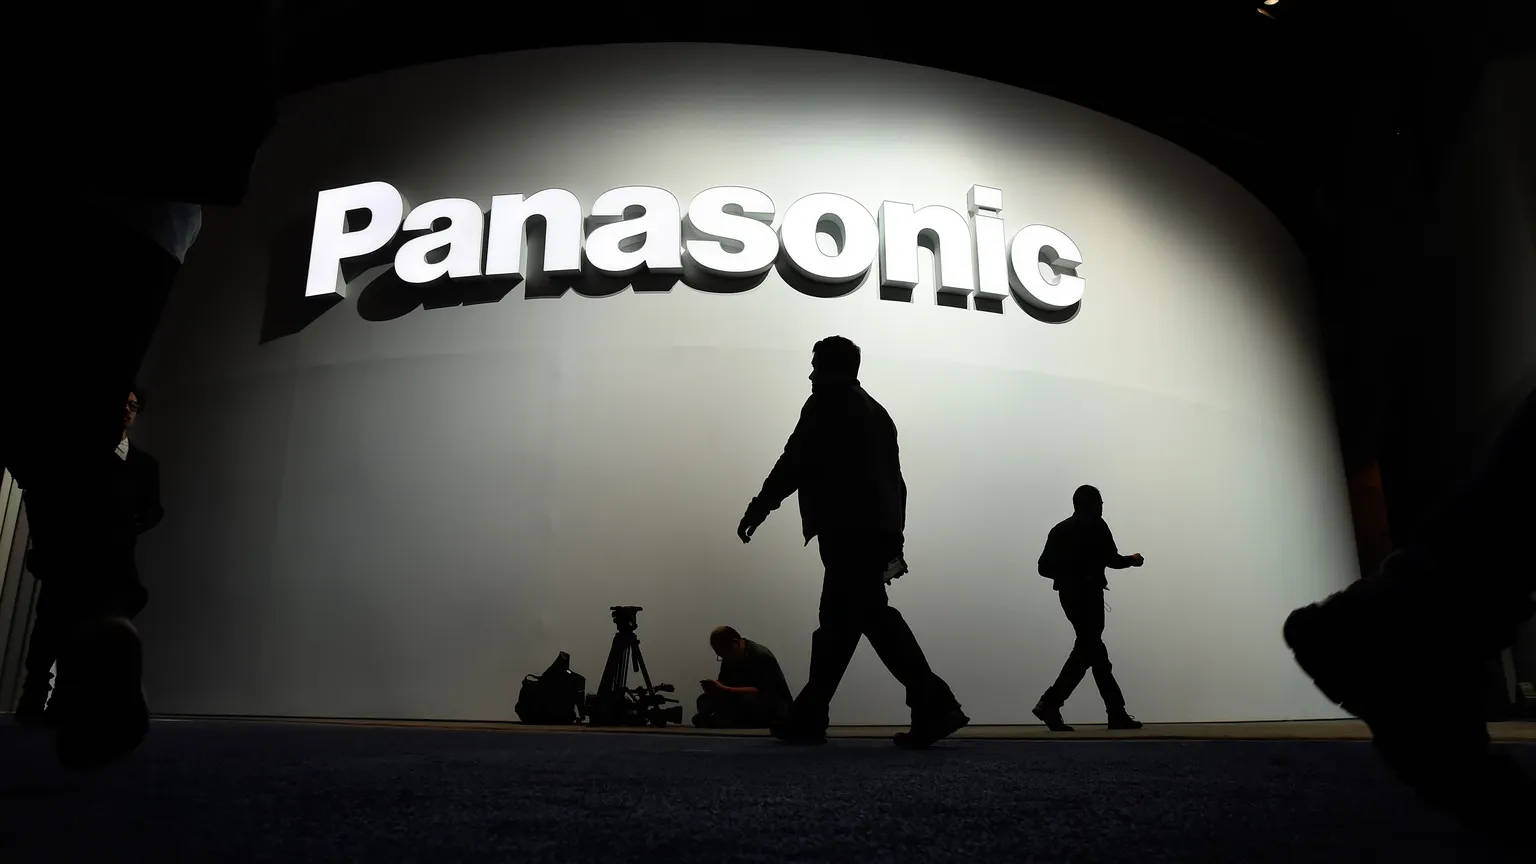 Panasonic Silhouette Men Background